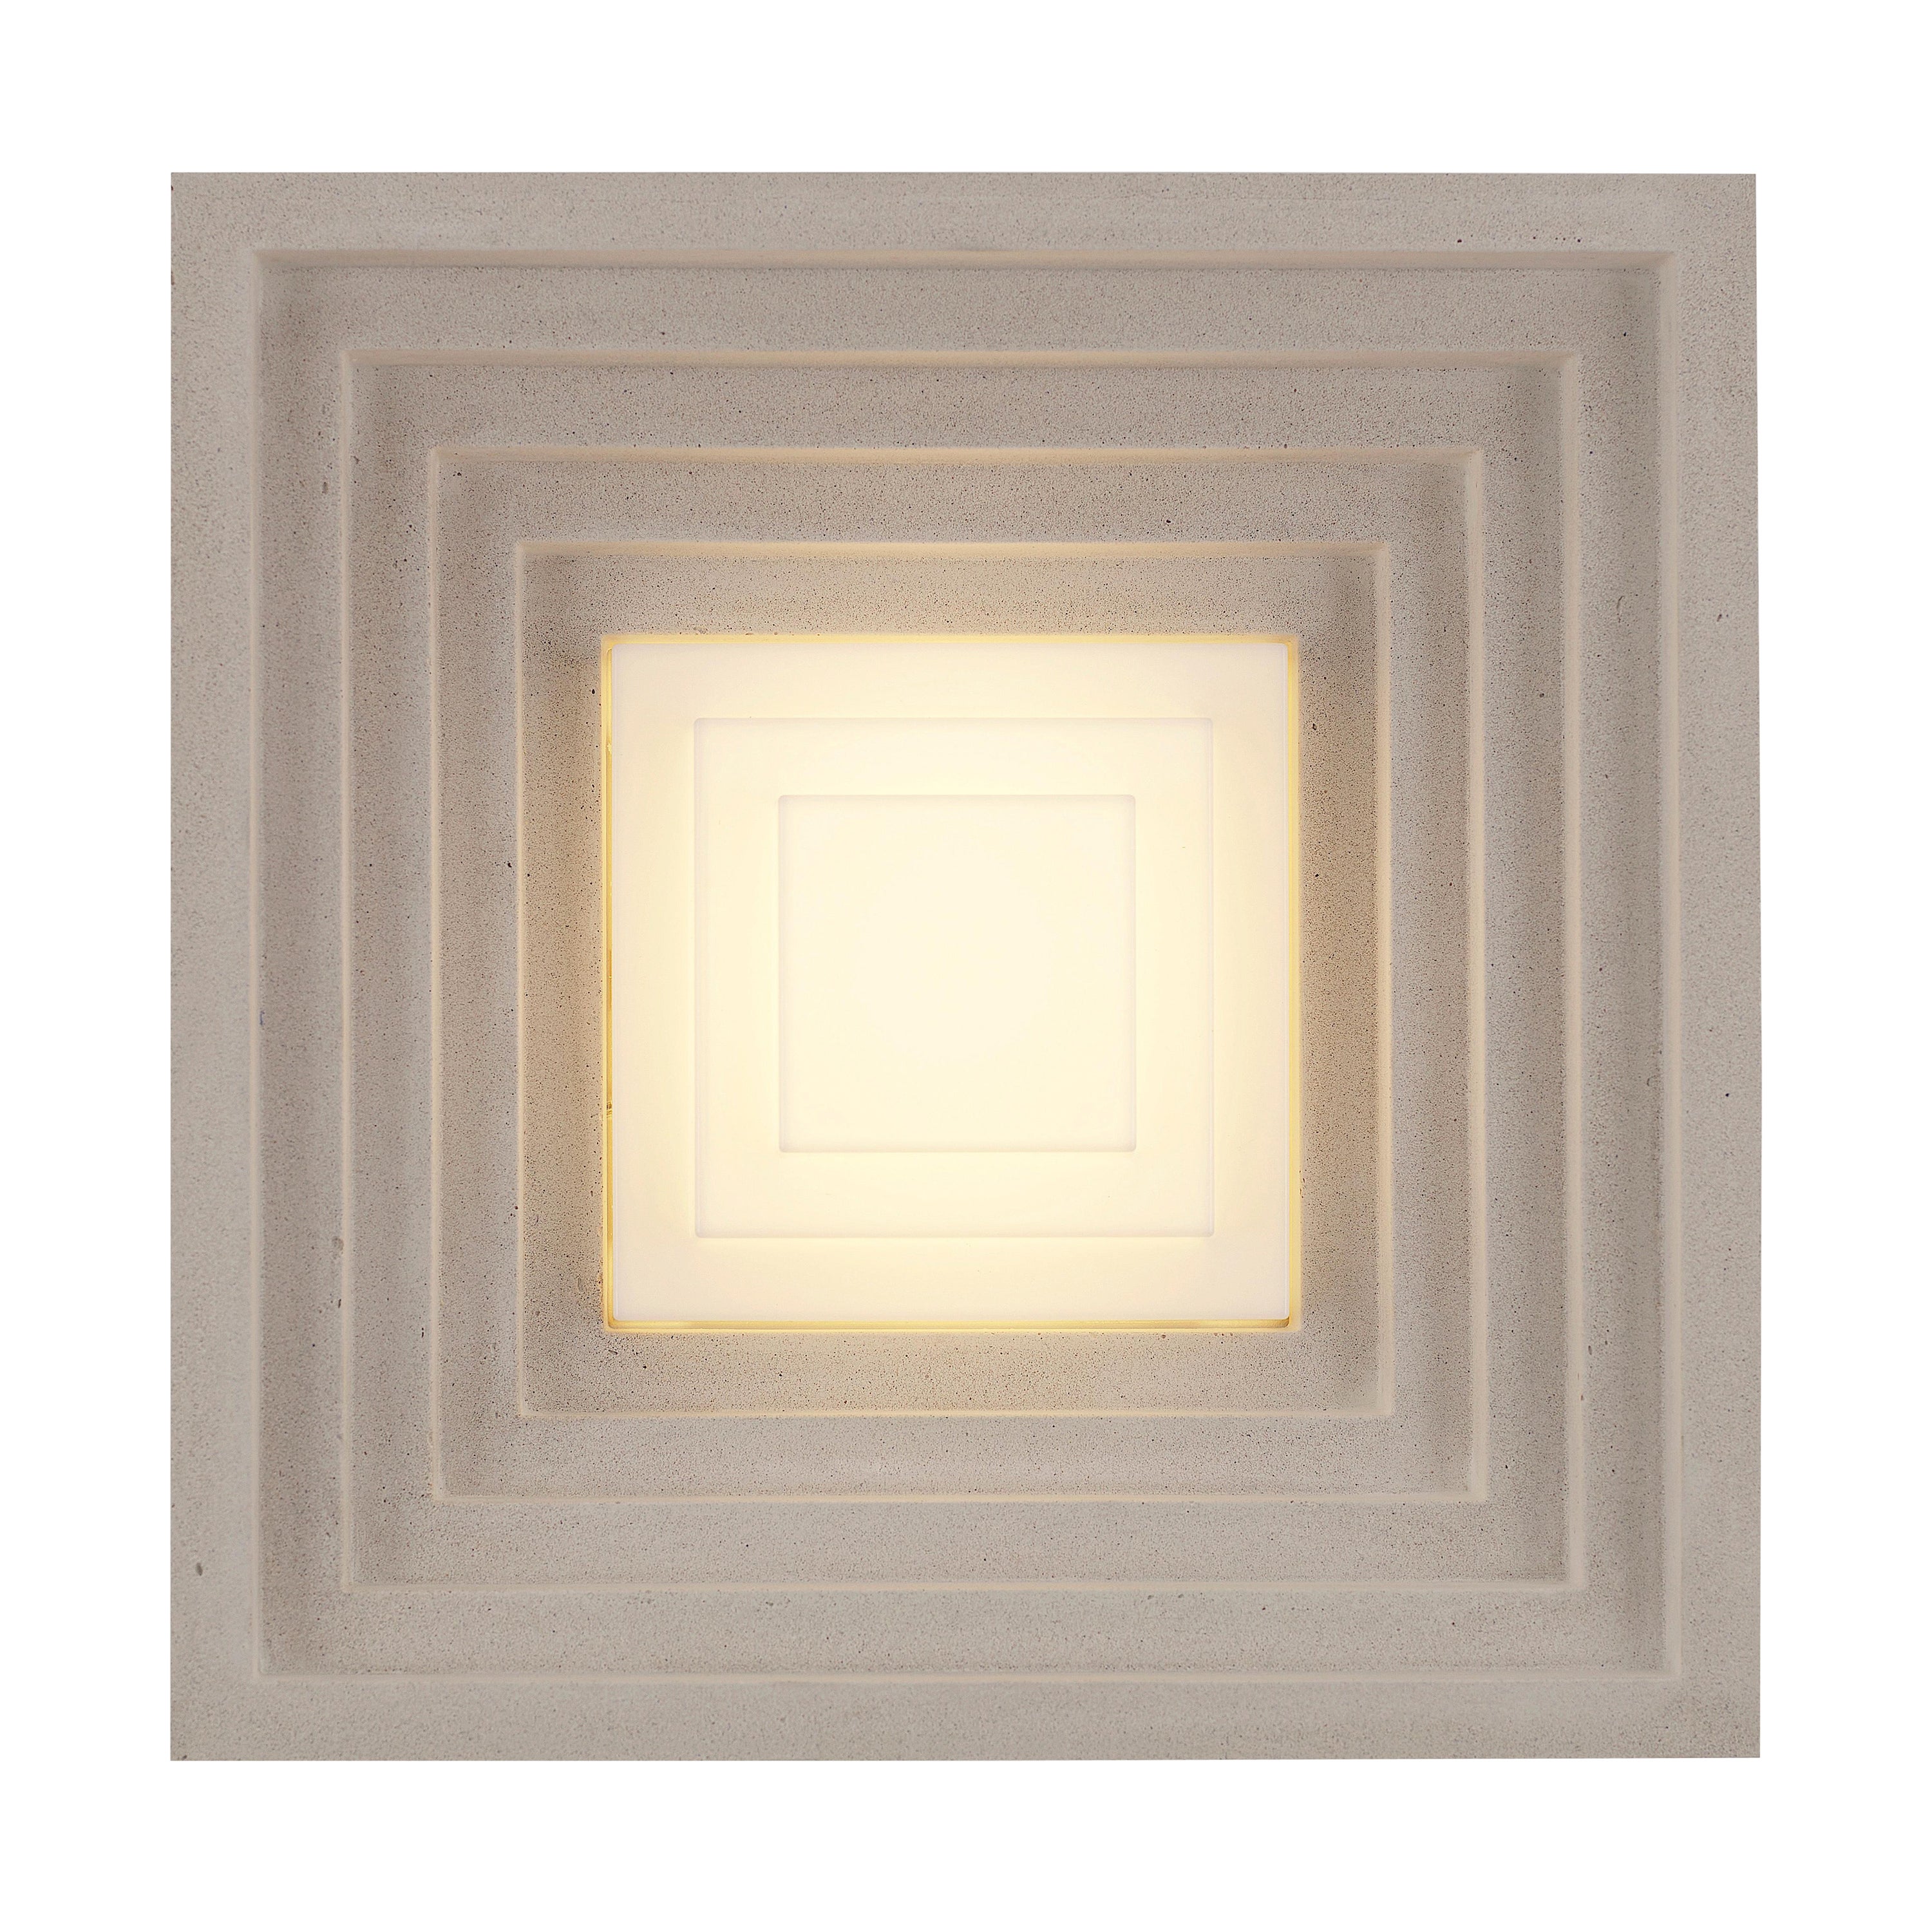 Lee Broom - Pantheum Surface Light